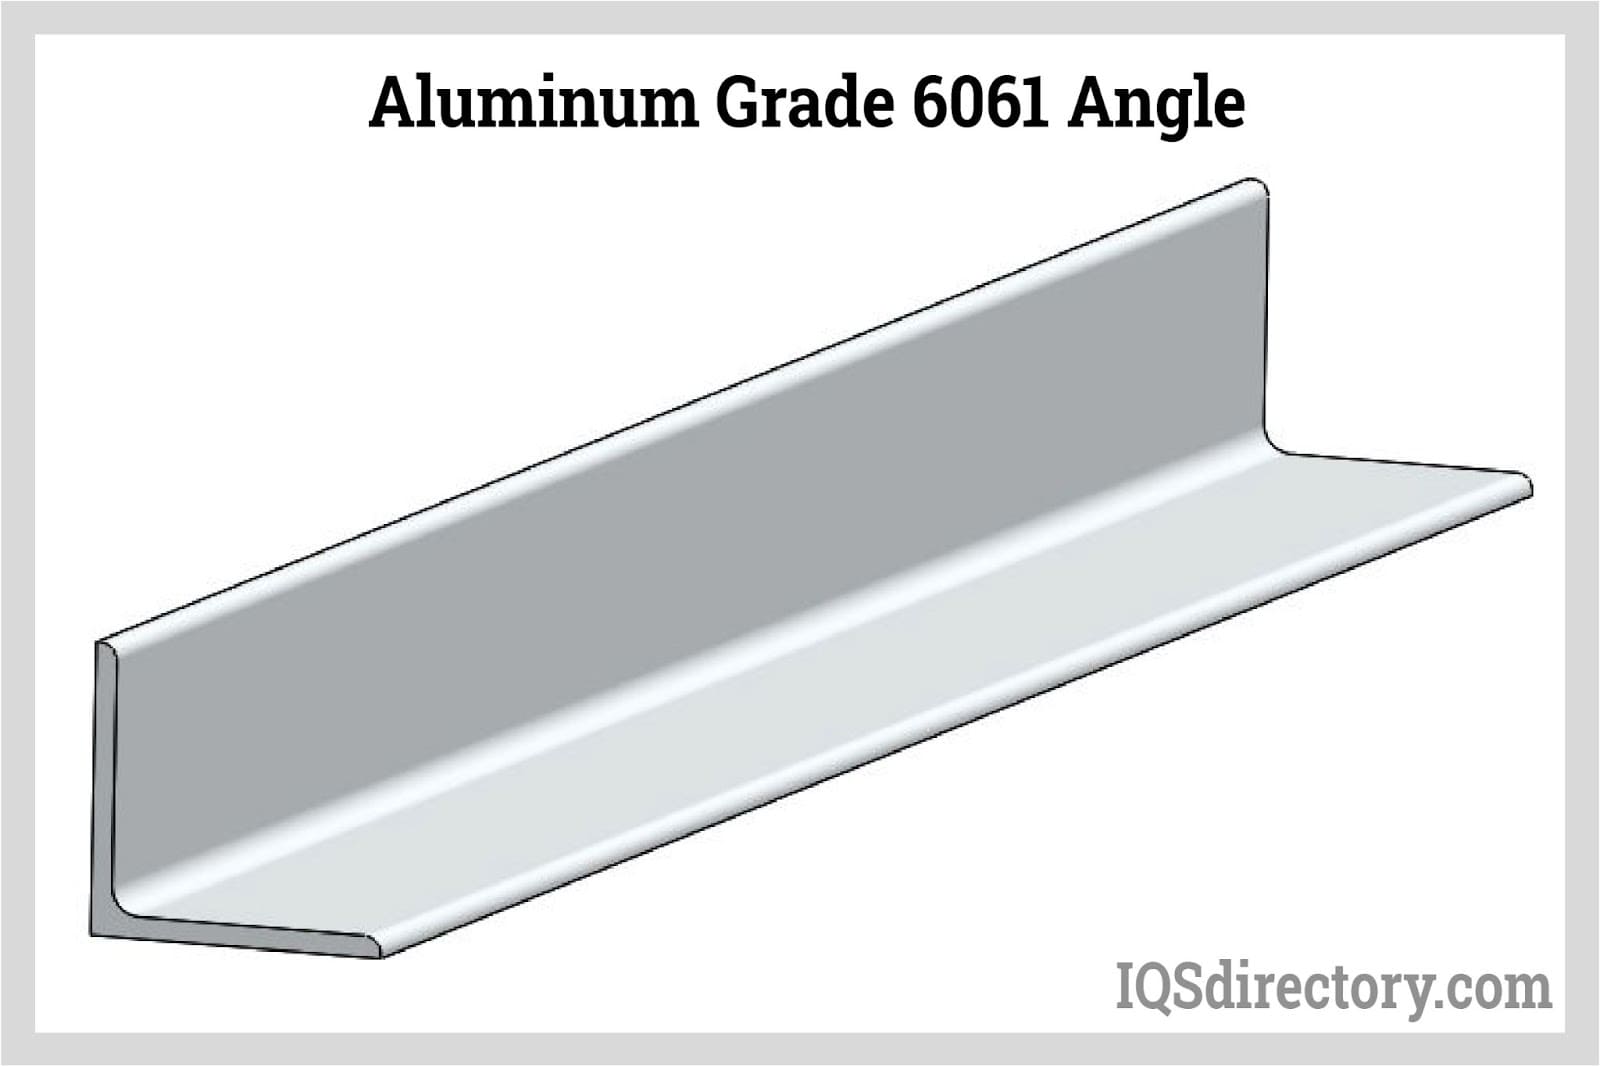 Aluminum Grade 6061 Angle